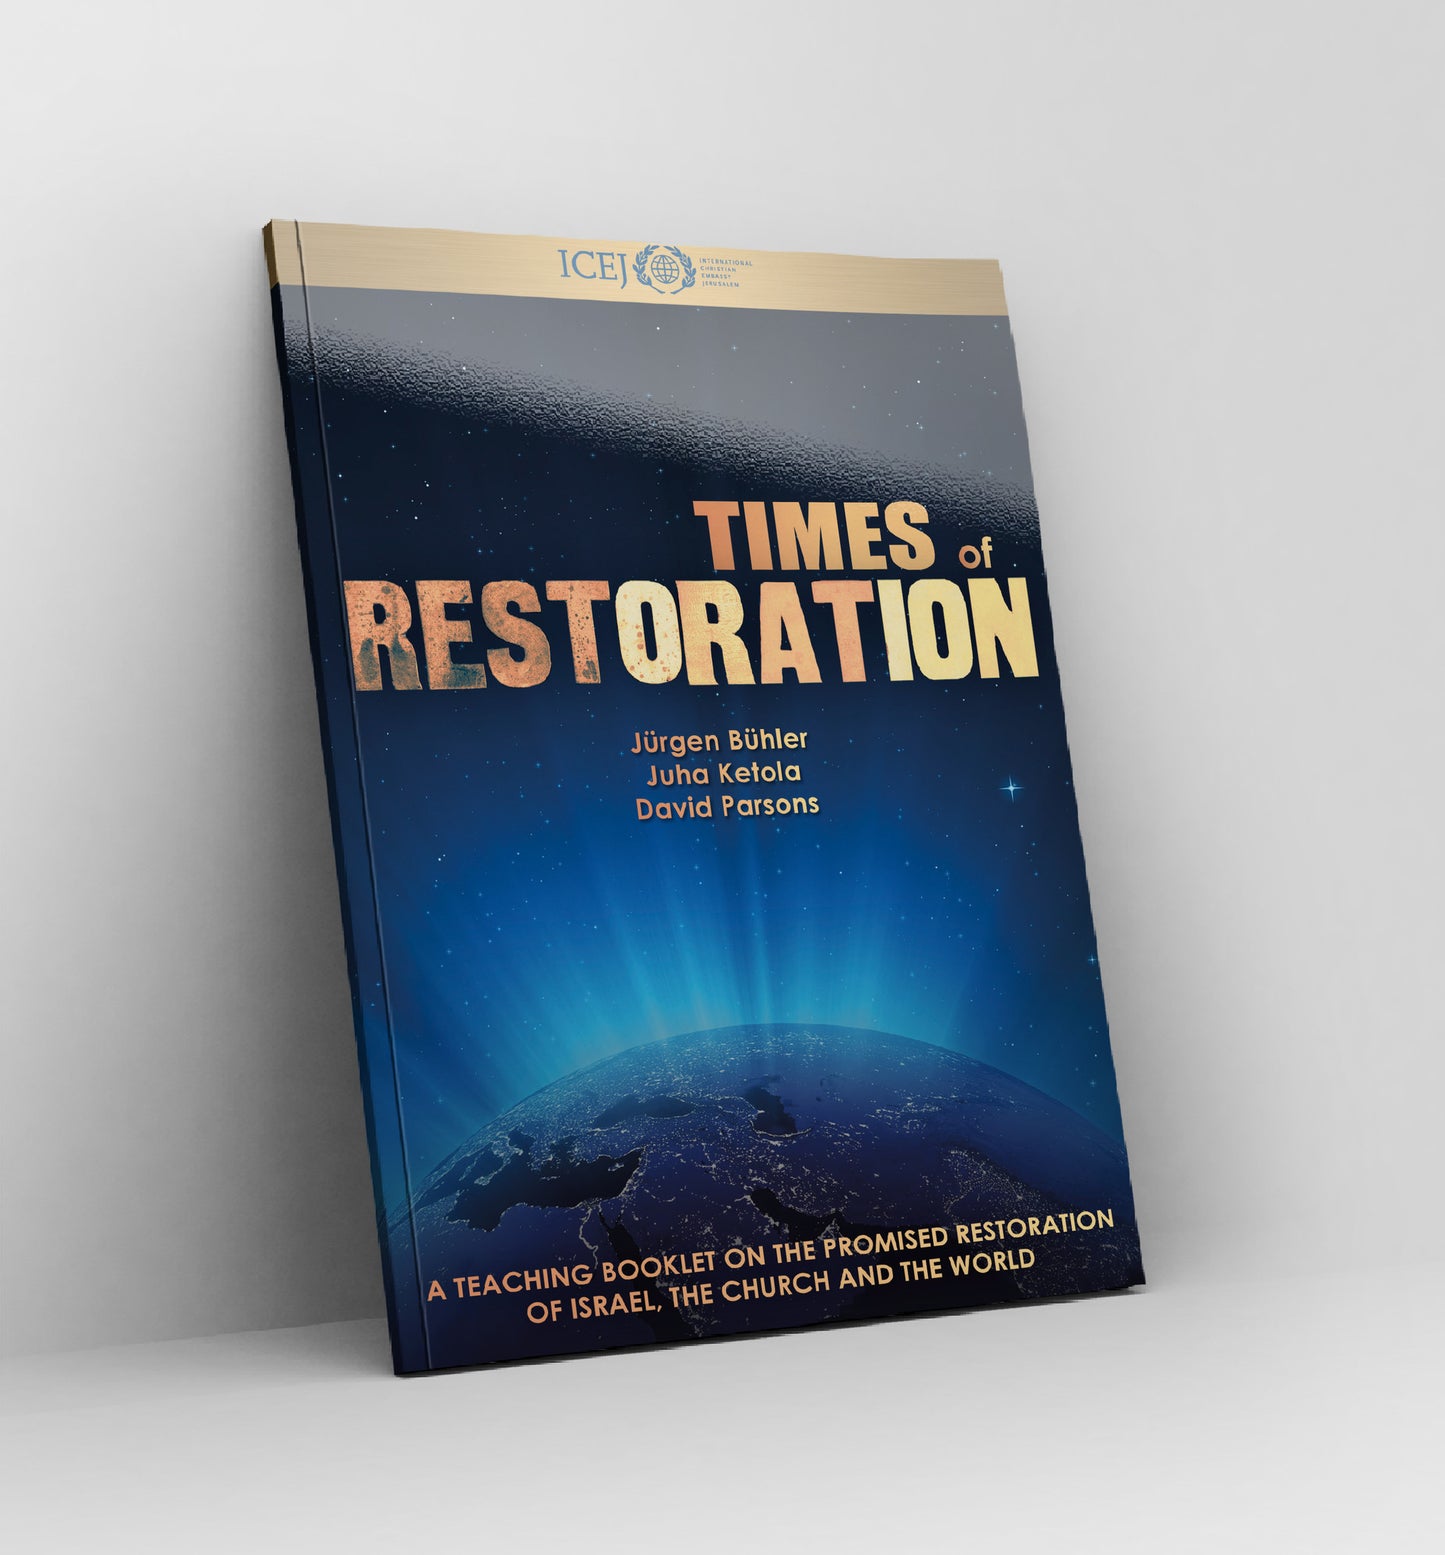 Times of Restoration by Jürgen Bühler, Juha Ketola, and David Parsons - Book